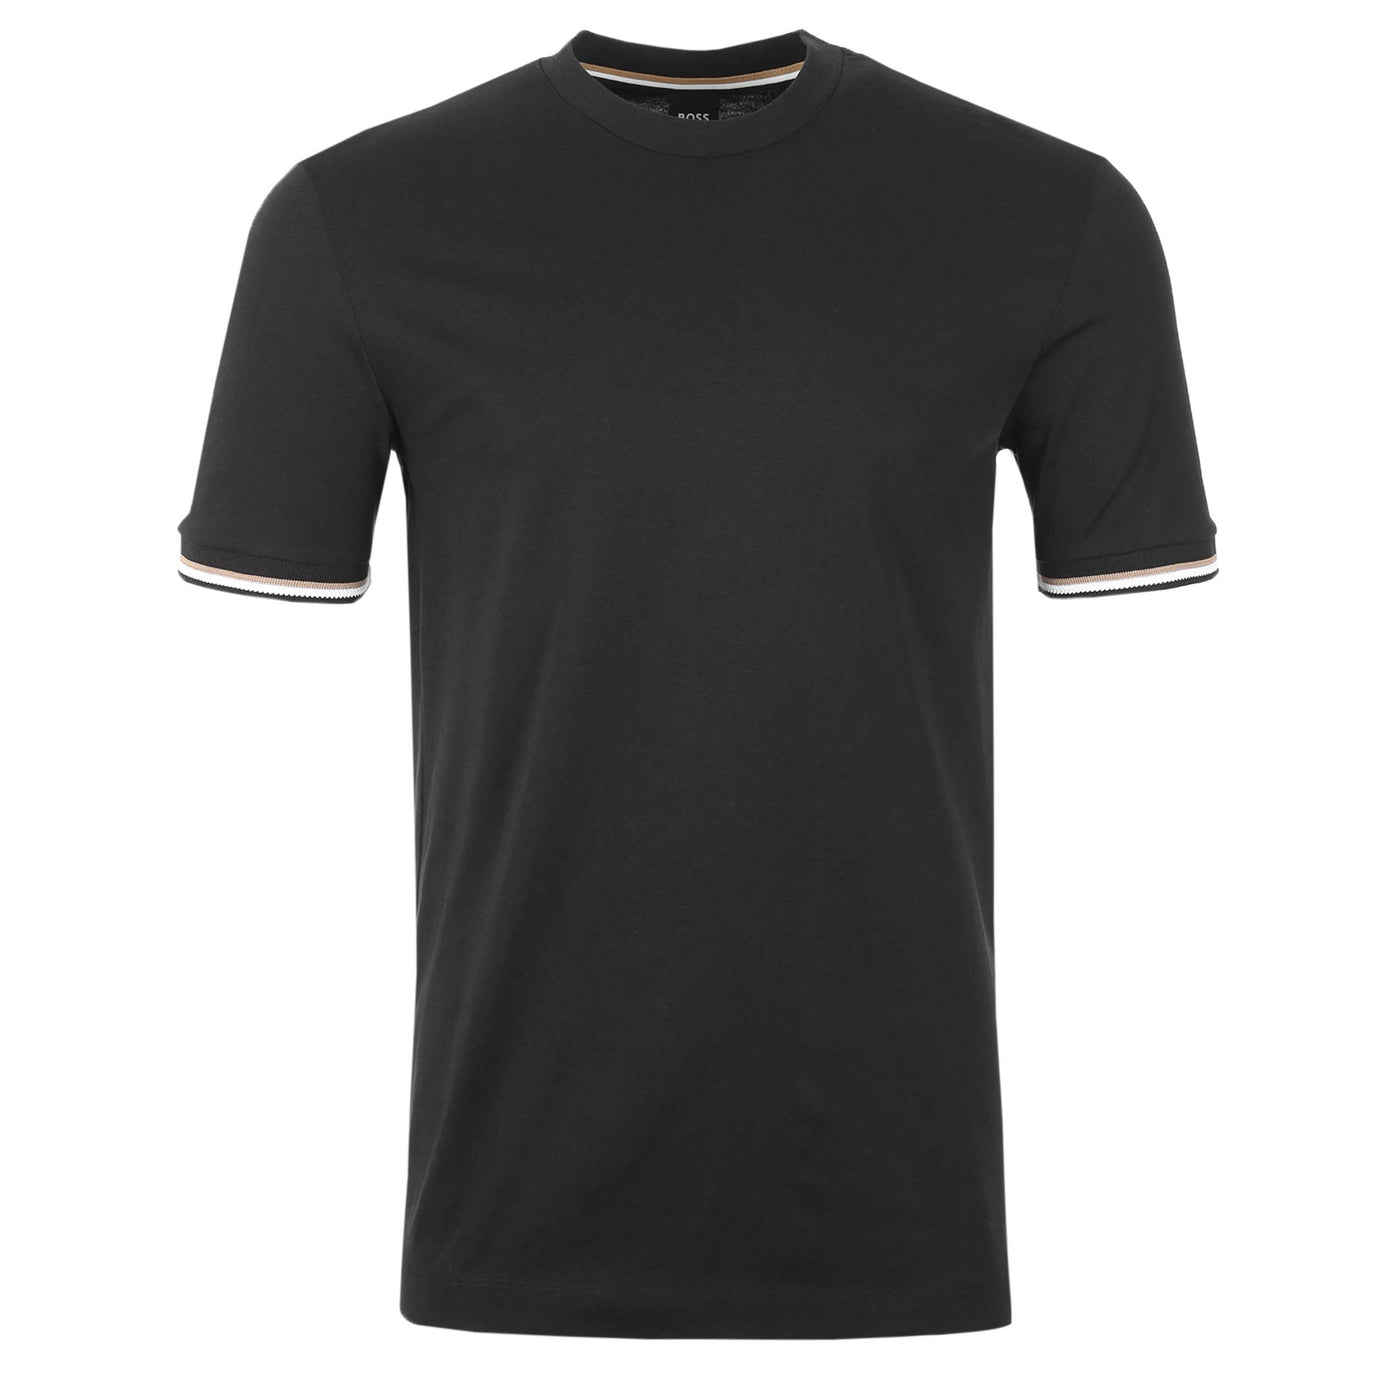 BOSS Thompson 04 T Shirt in Black